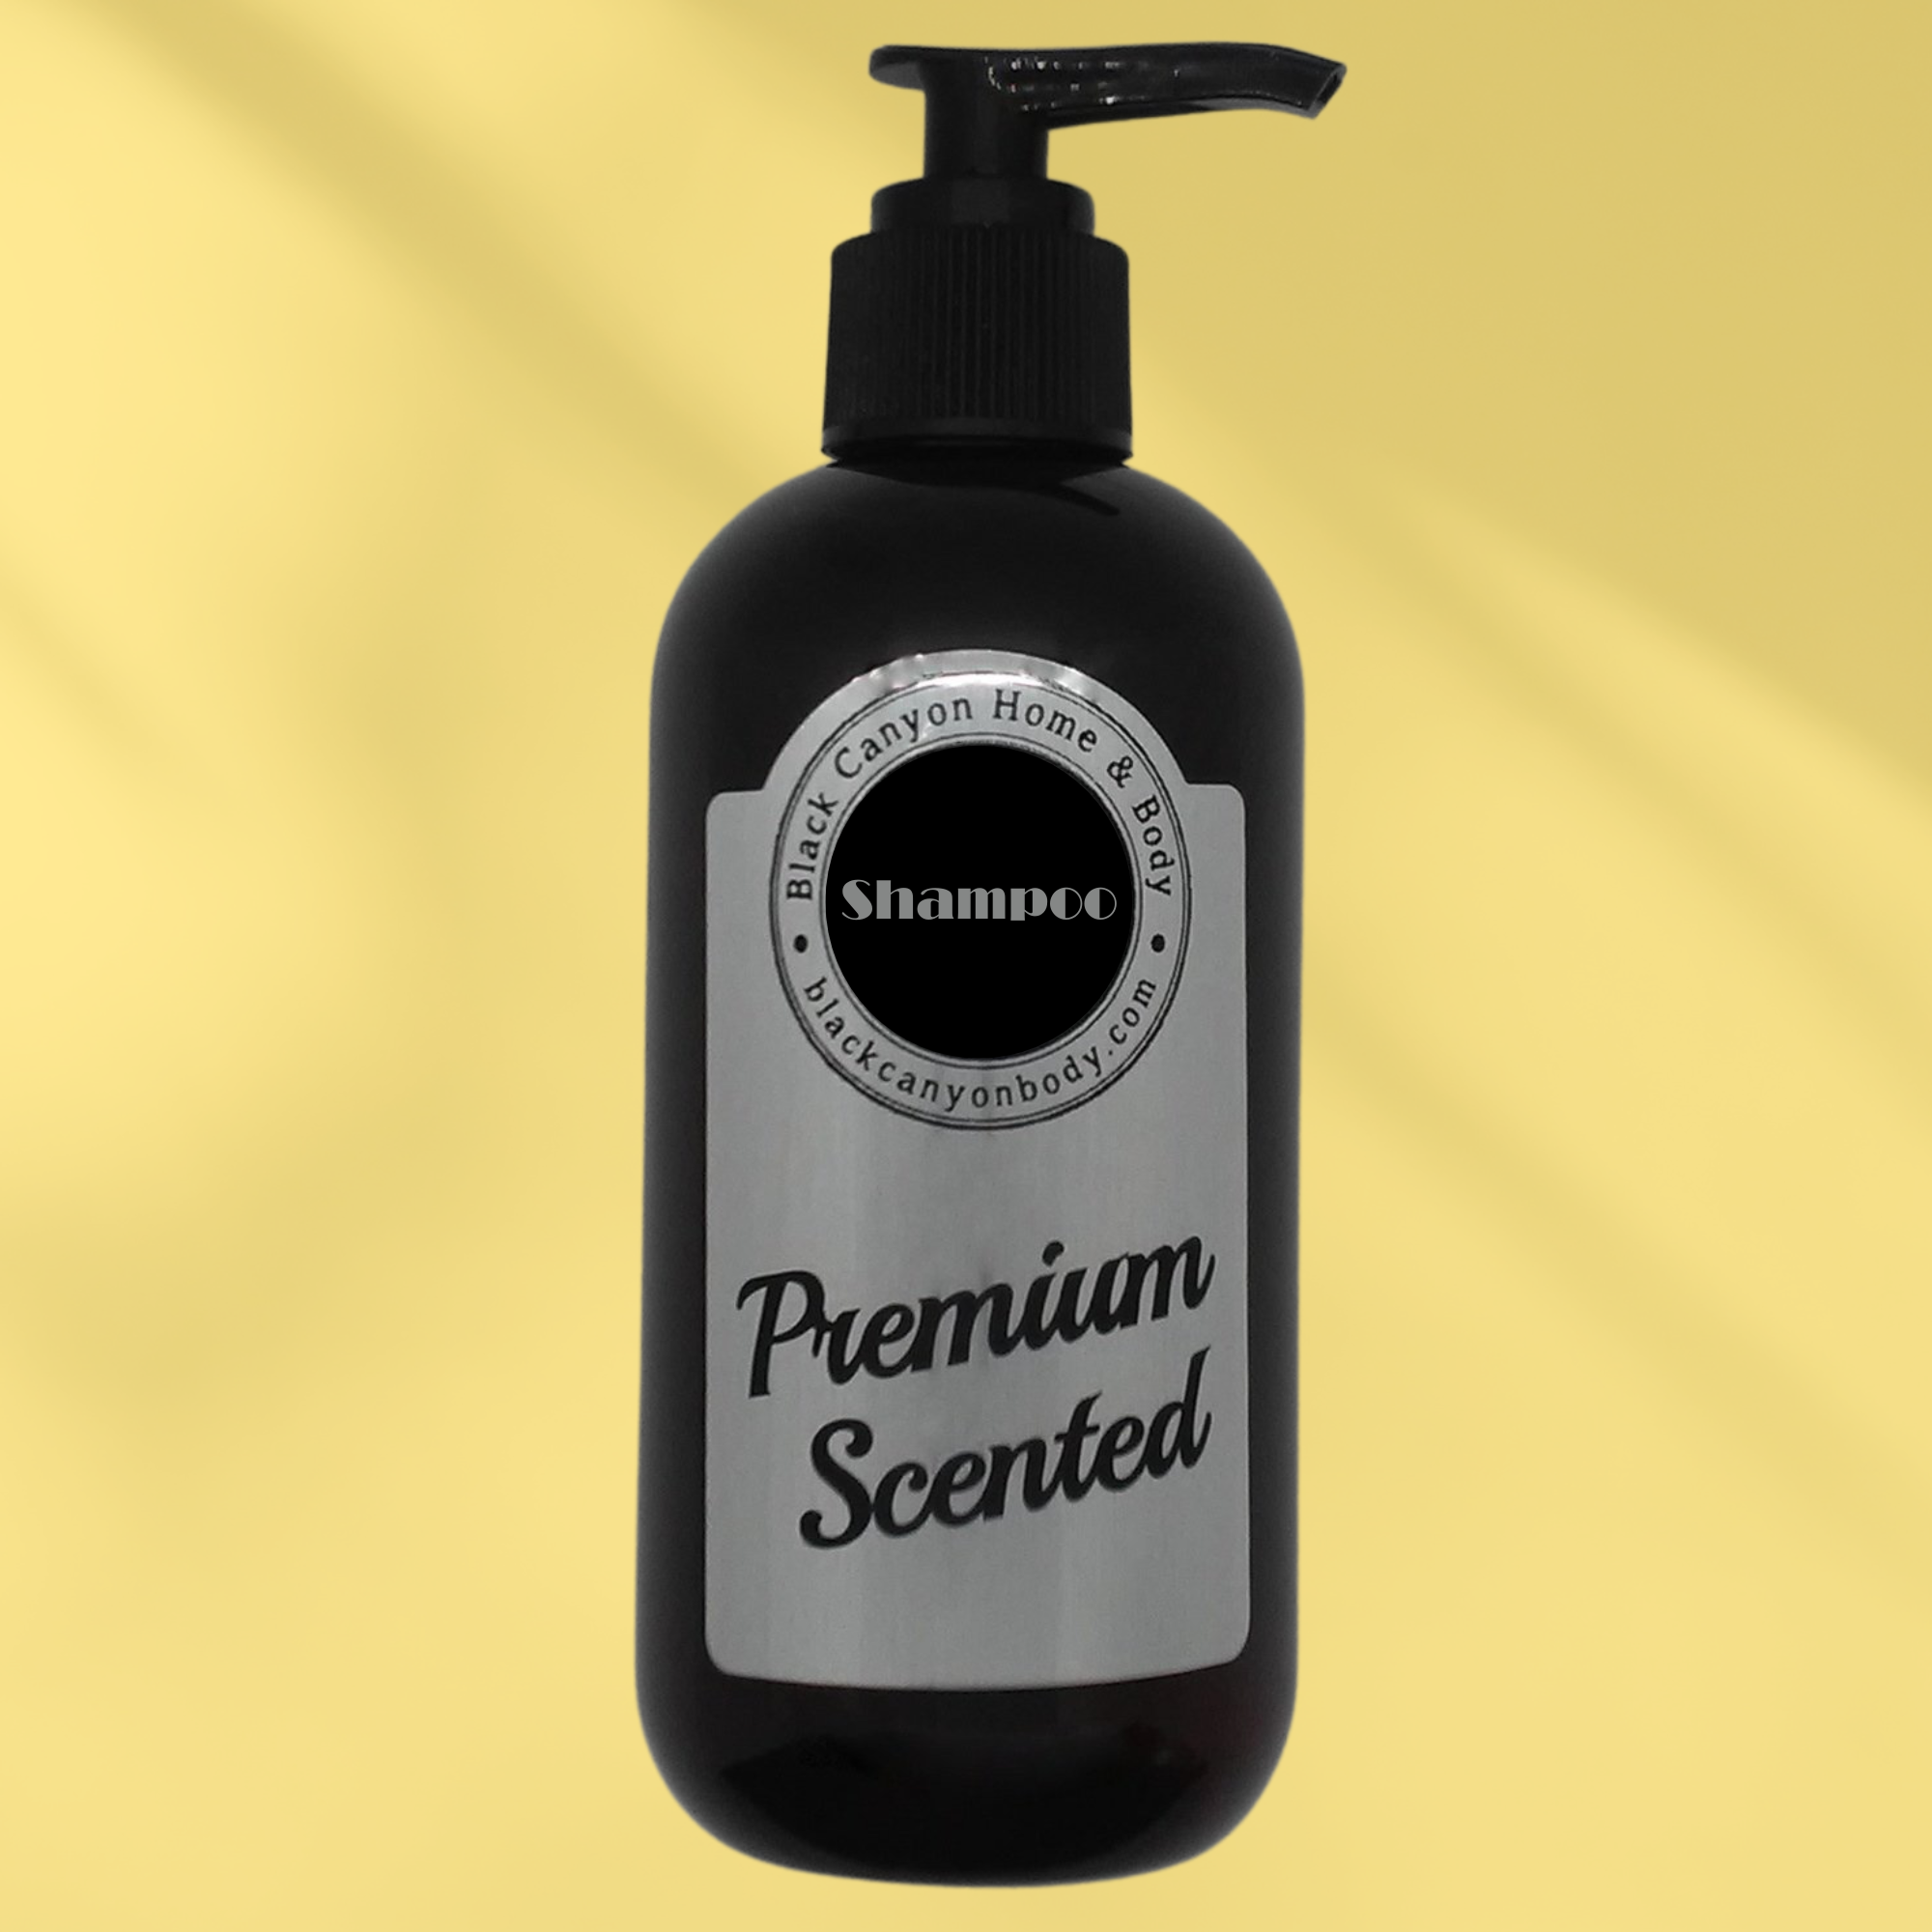 Paydens Cobalt Bergamot Fig & Leather Scented Shampoo with Argan Oil For Men